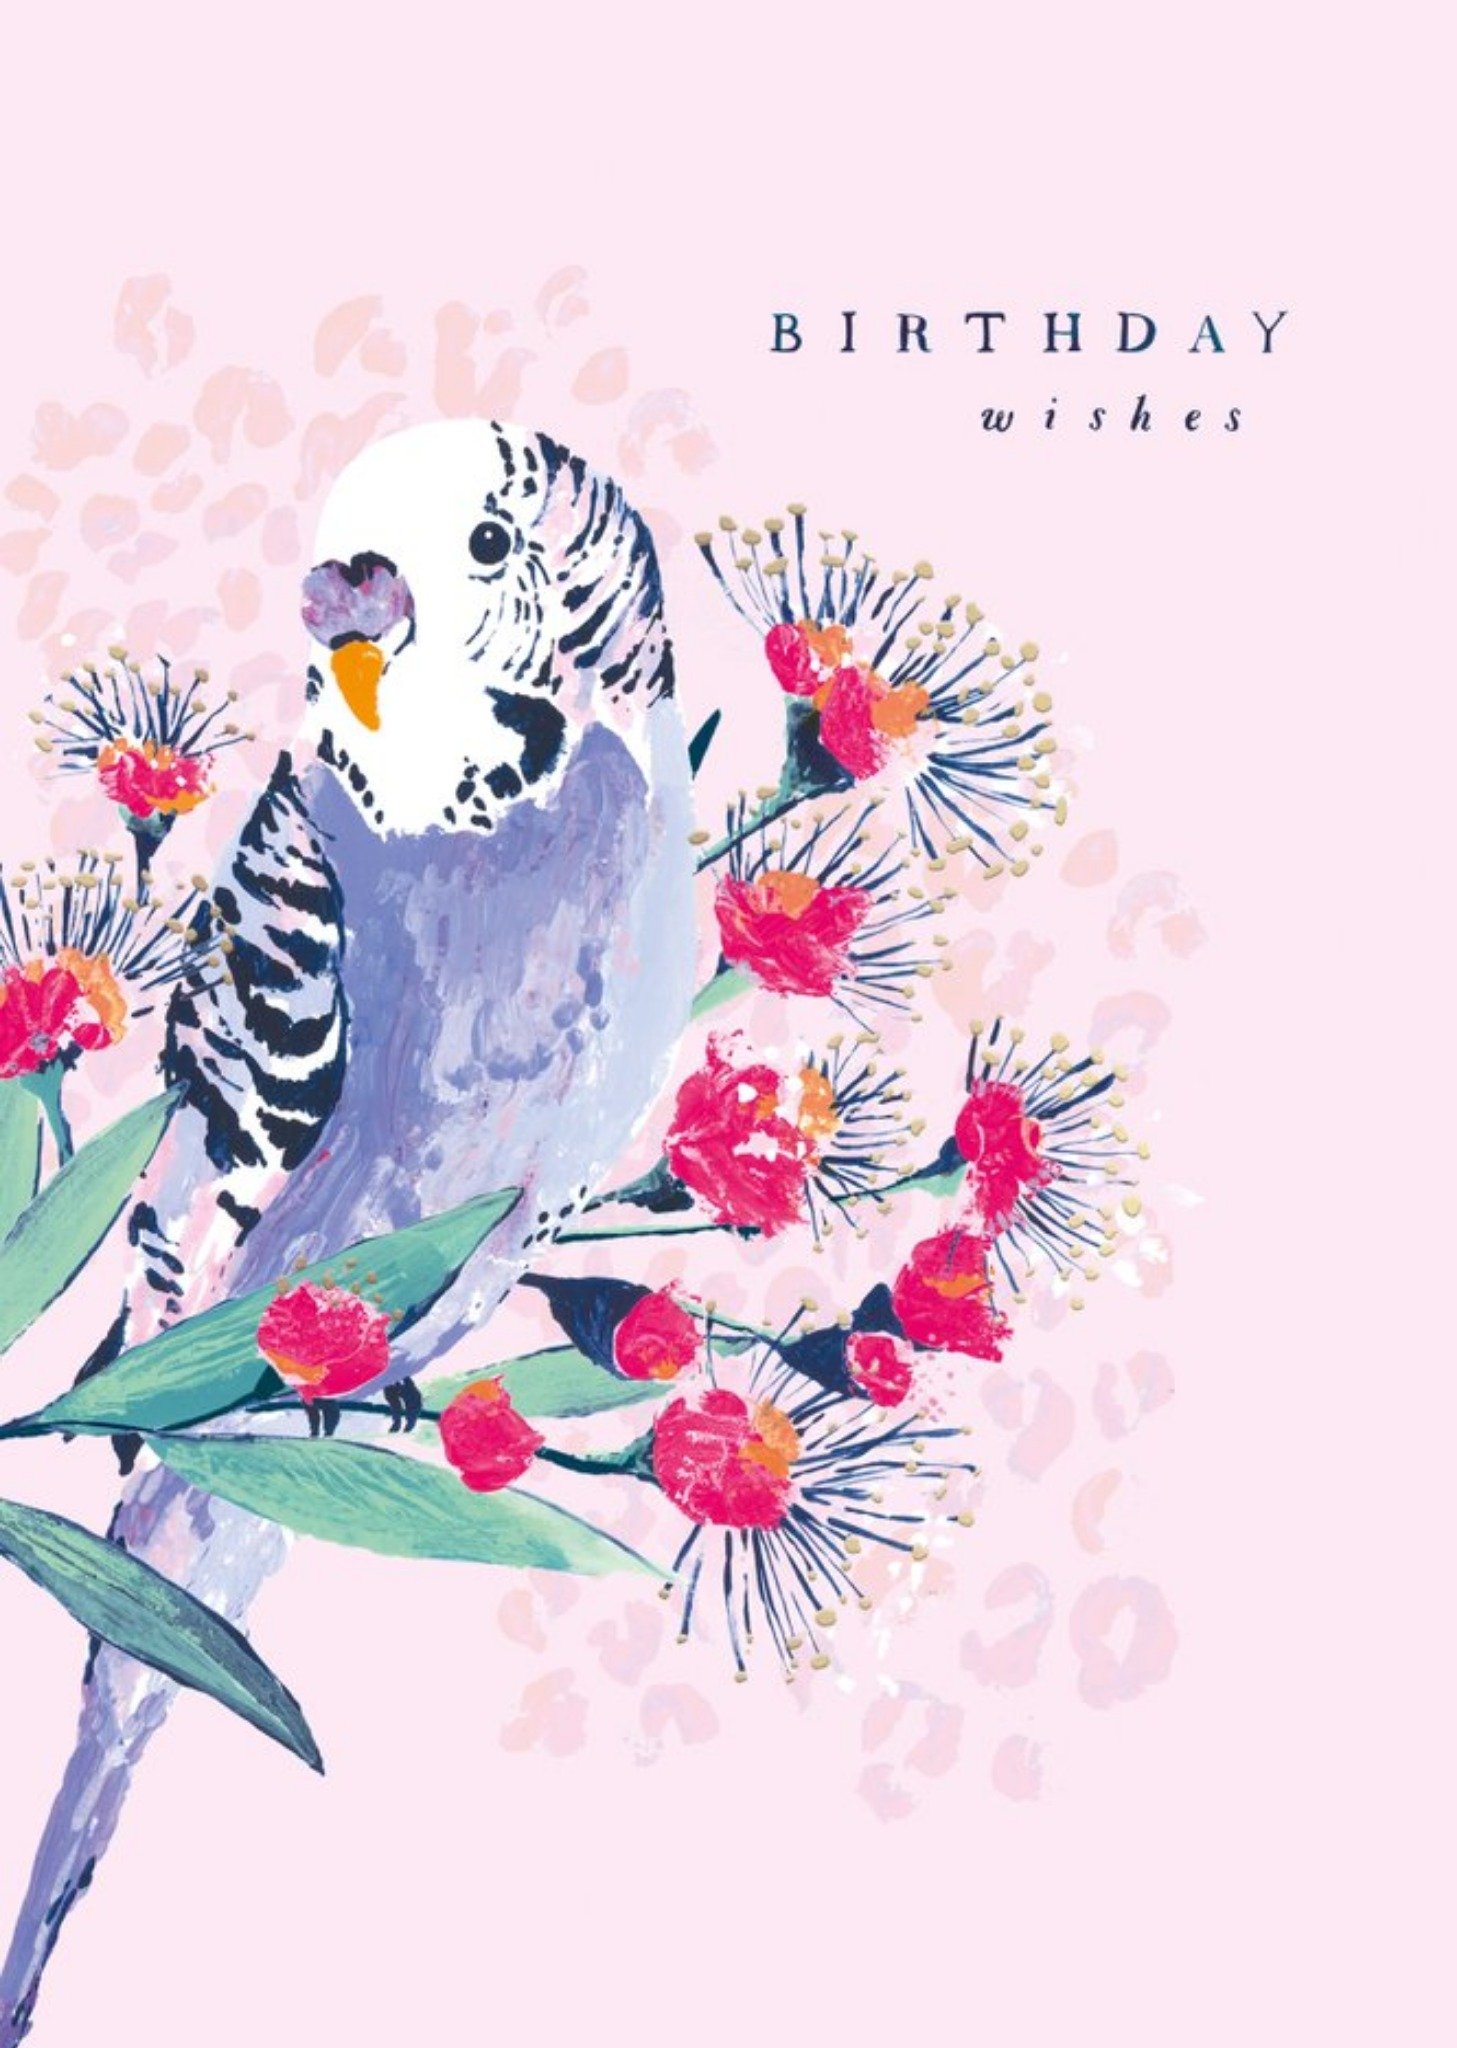 Moonpig Bird Floral Paint Birthday Wishes Card Ecard